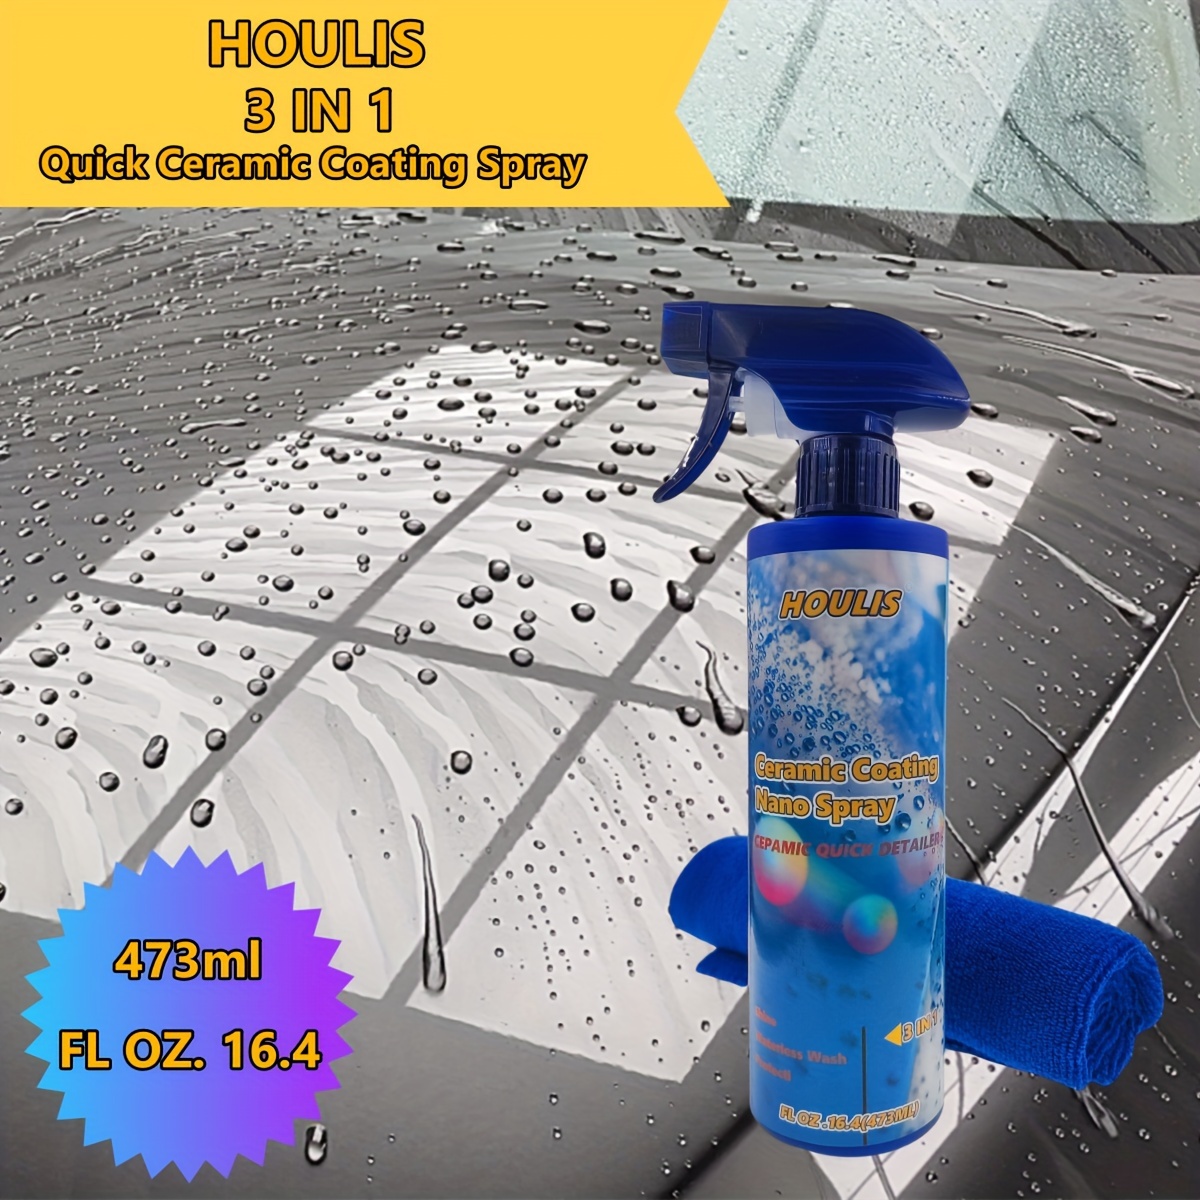 Hengjierun 3 in 1 High Protection Quick Car Ceramic Coating Spray - Car Wax  Polish Spray, Waterless Car Wash & Car Wax Hydrophobic Top Coat Polish &  Polymer Paint Sealant Detail Protection